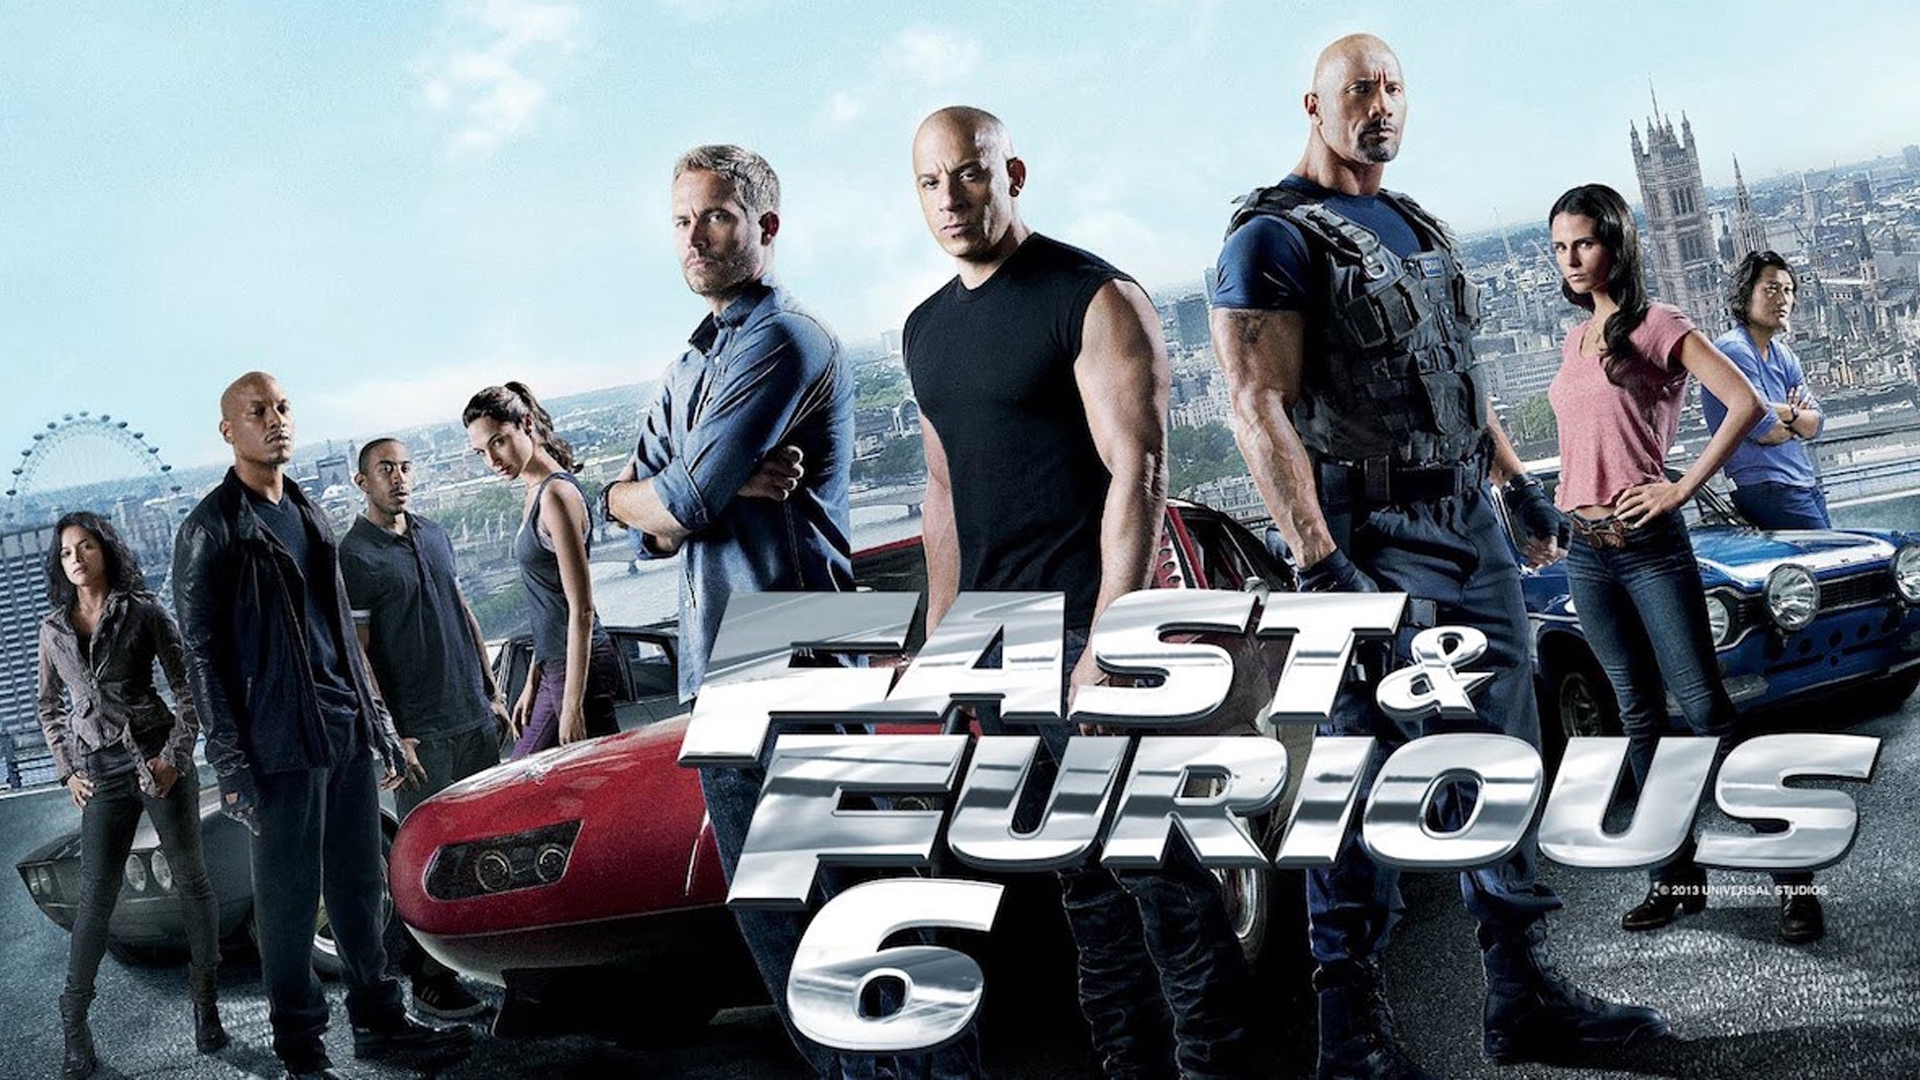 Fast s p a. Форсаж 6 (2013) Furious 6. Форсаж 6 fast & Furious 6 2013 Постер. Форсаж 6 2013 Постер.